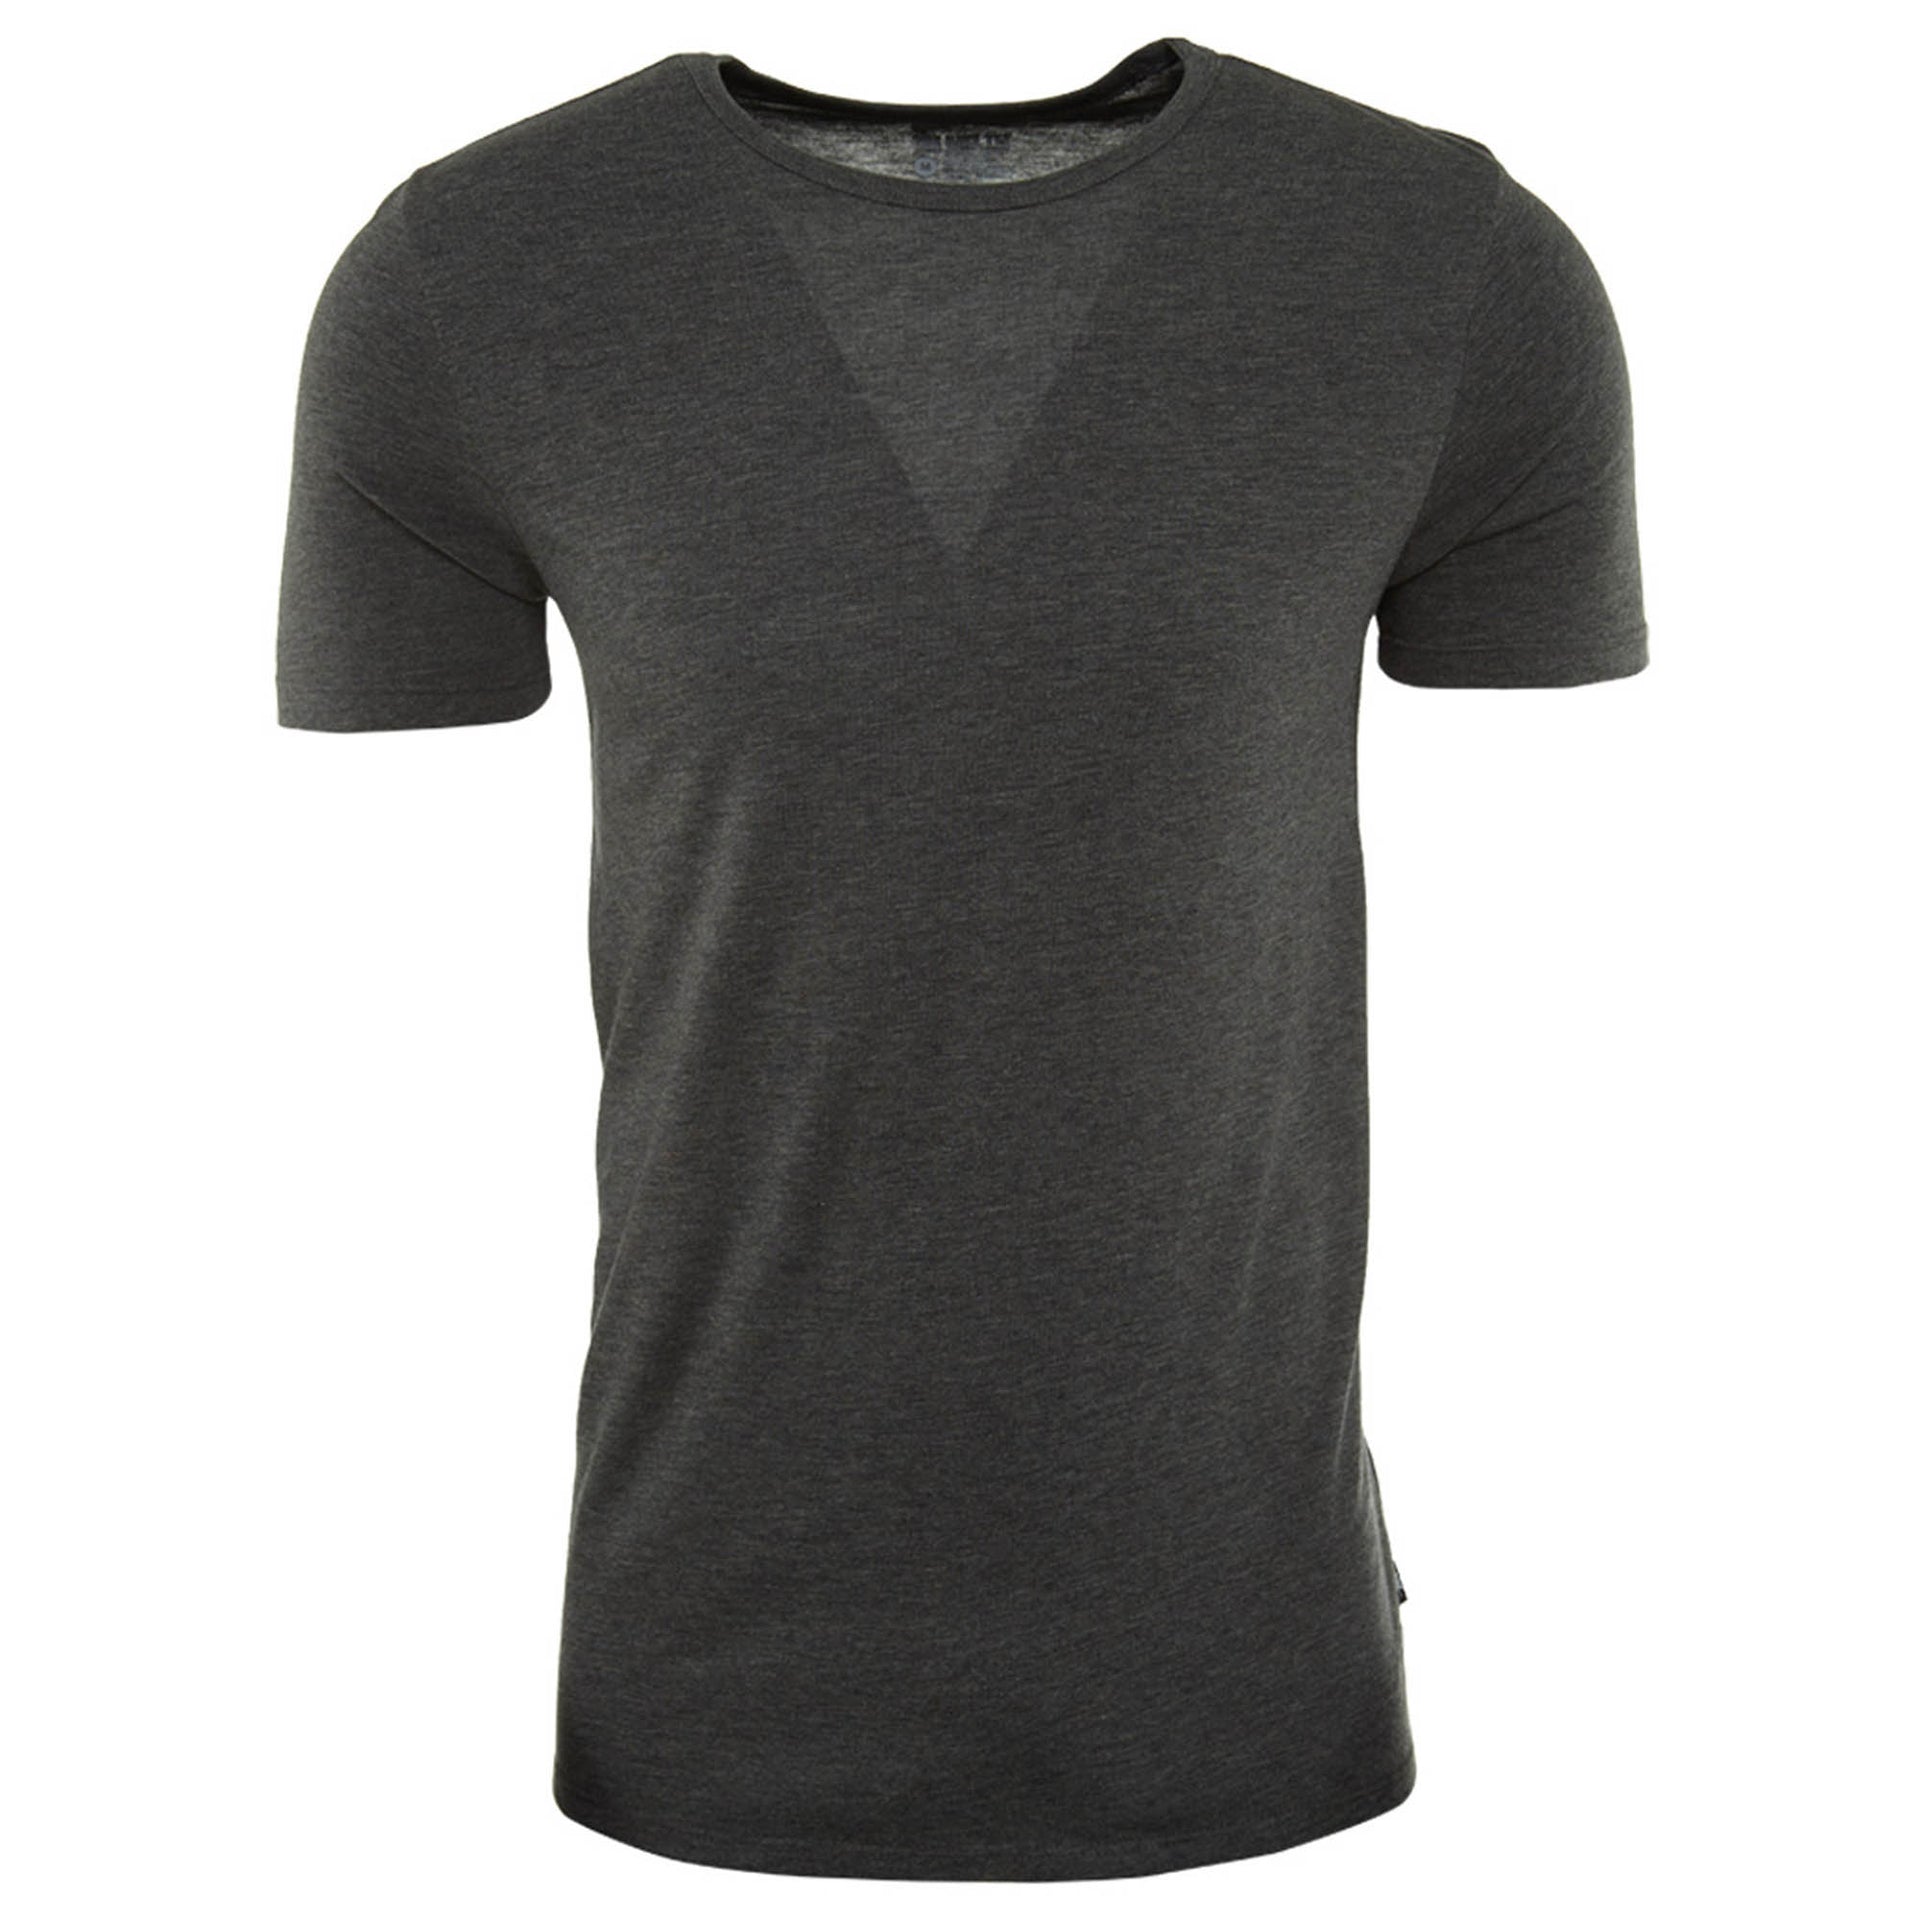 Nike Solid Futura T-shirt Mens Style : 708336